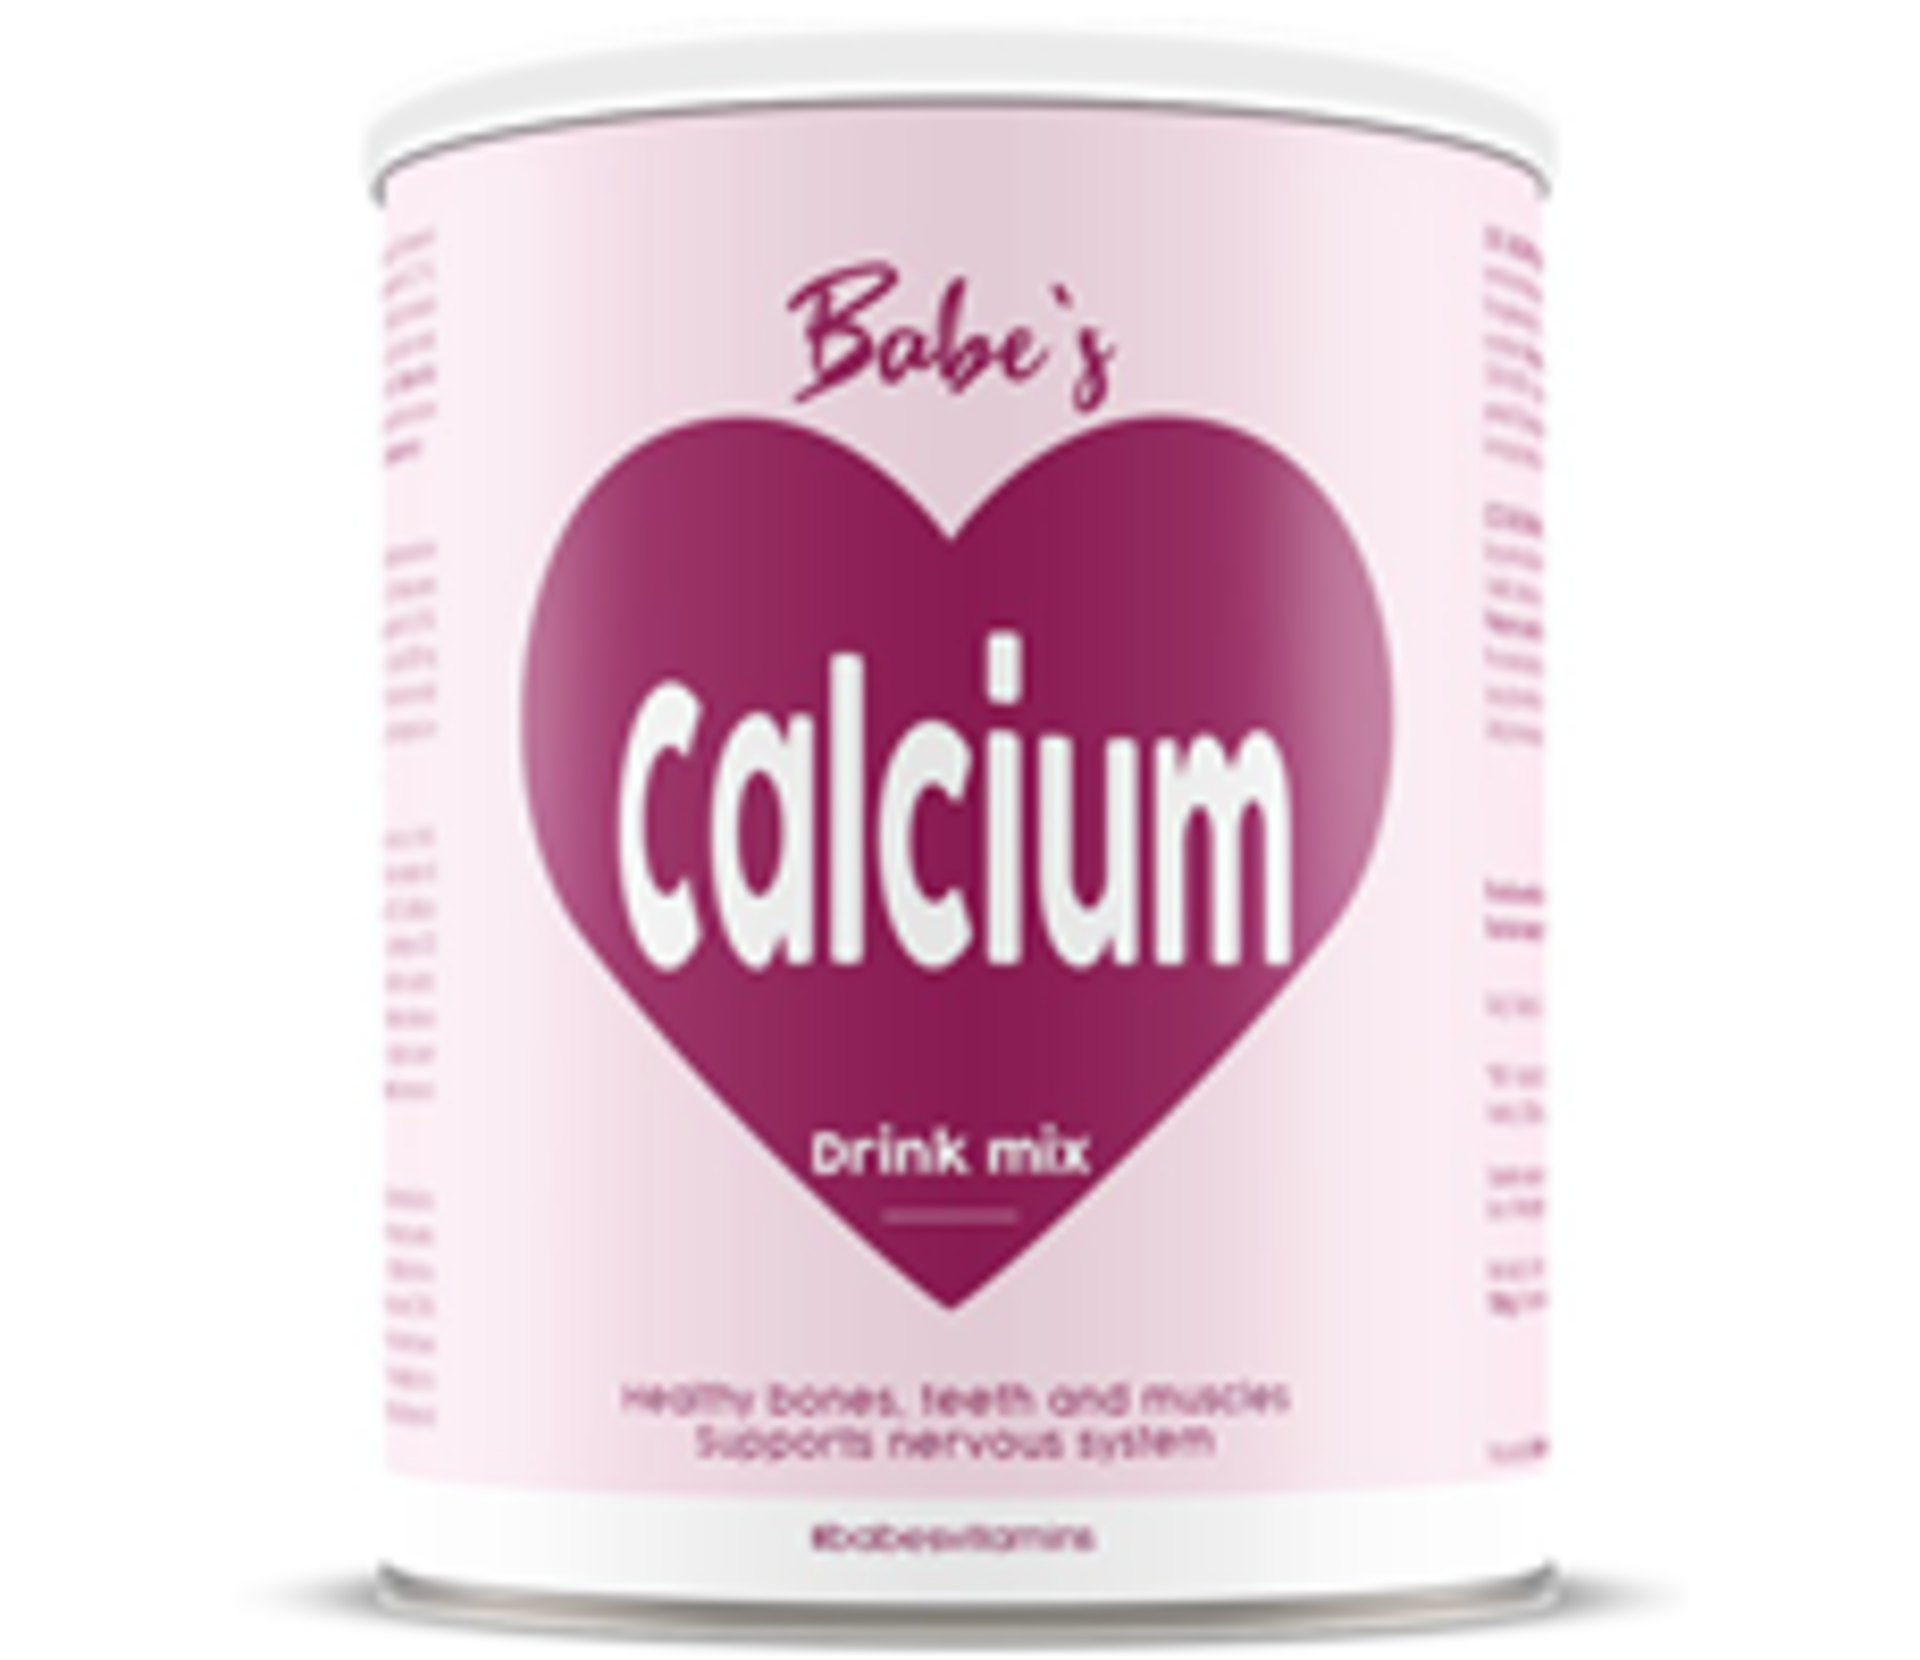 Babe´s Calcium 150 g - expirace